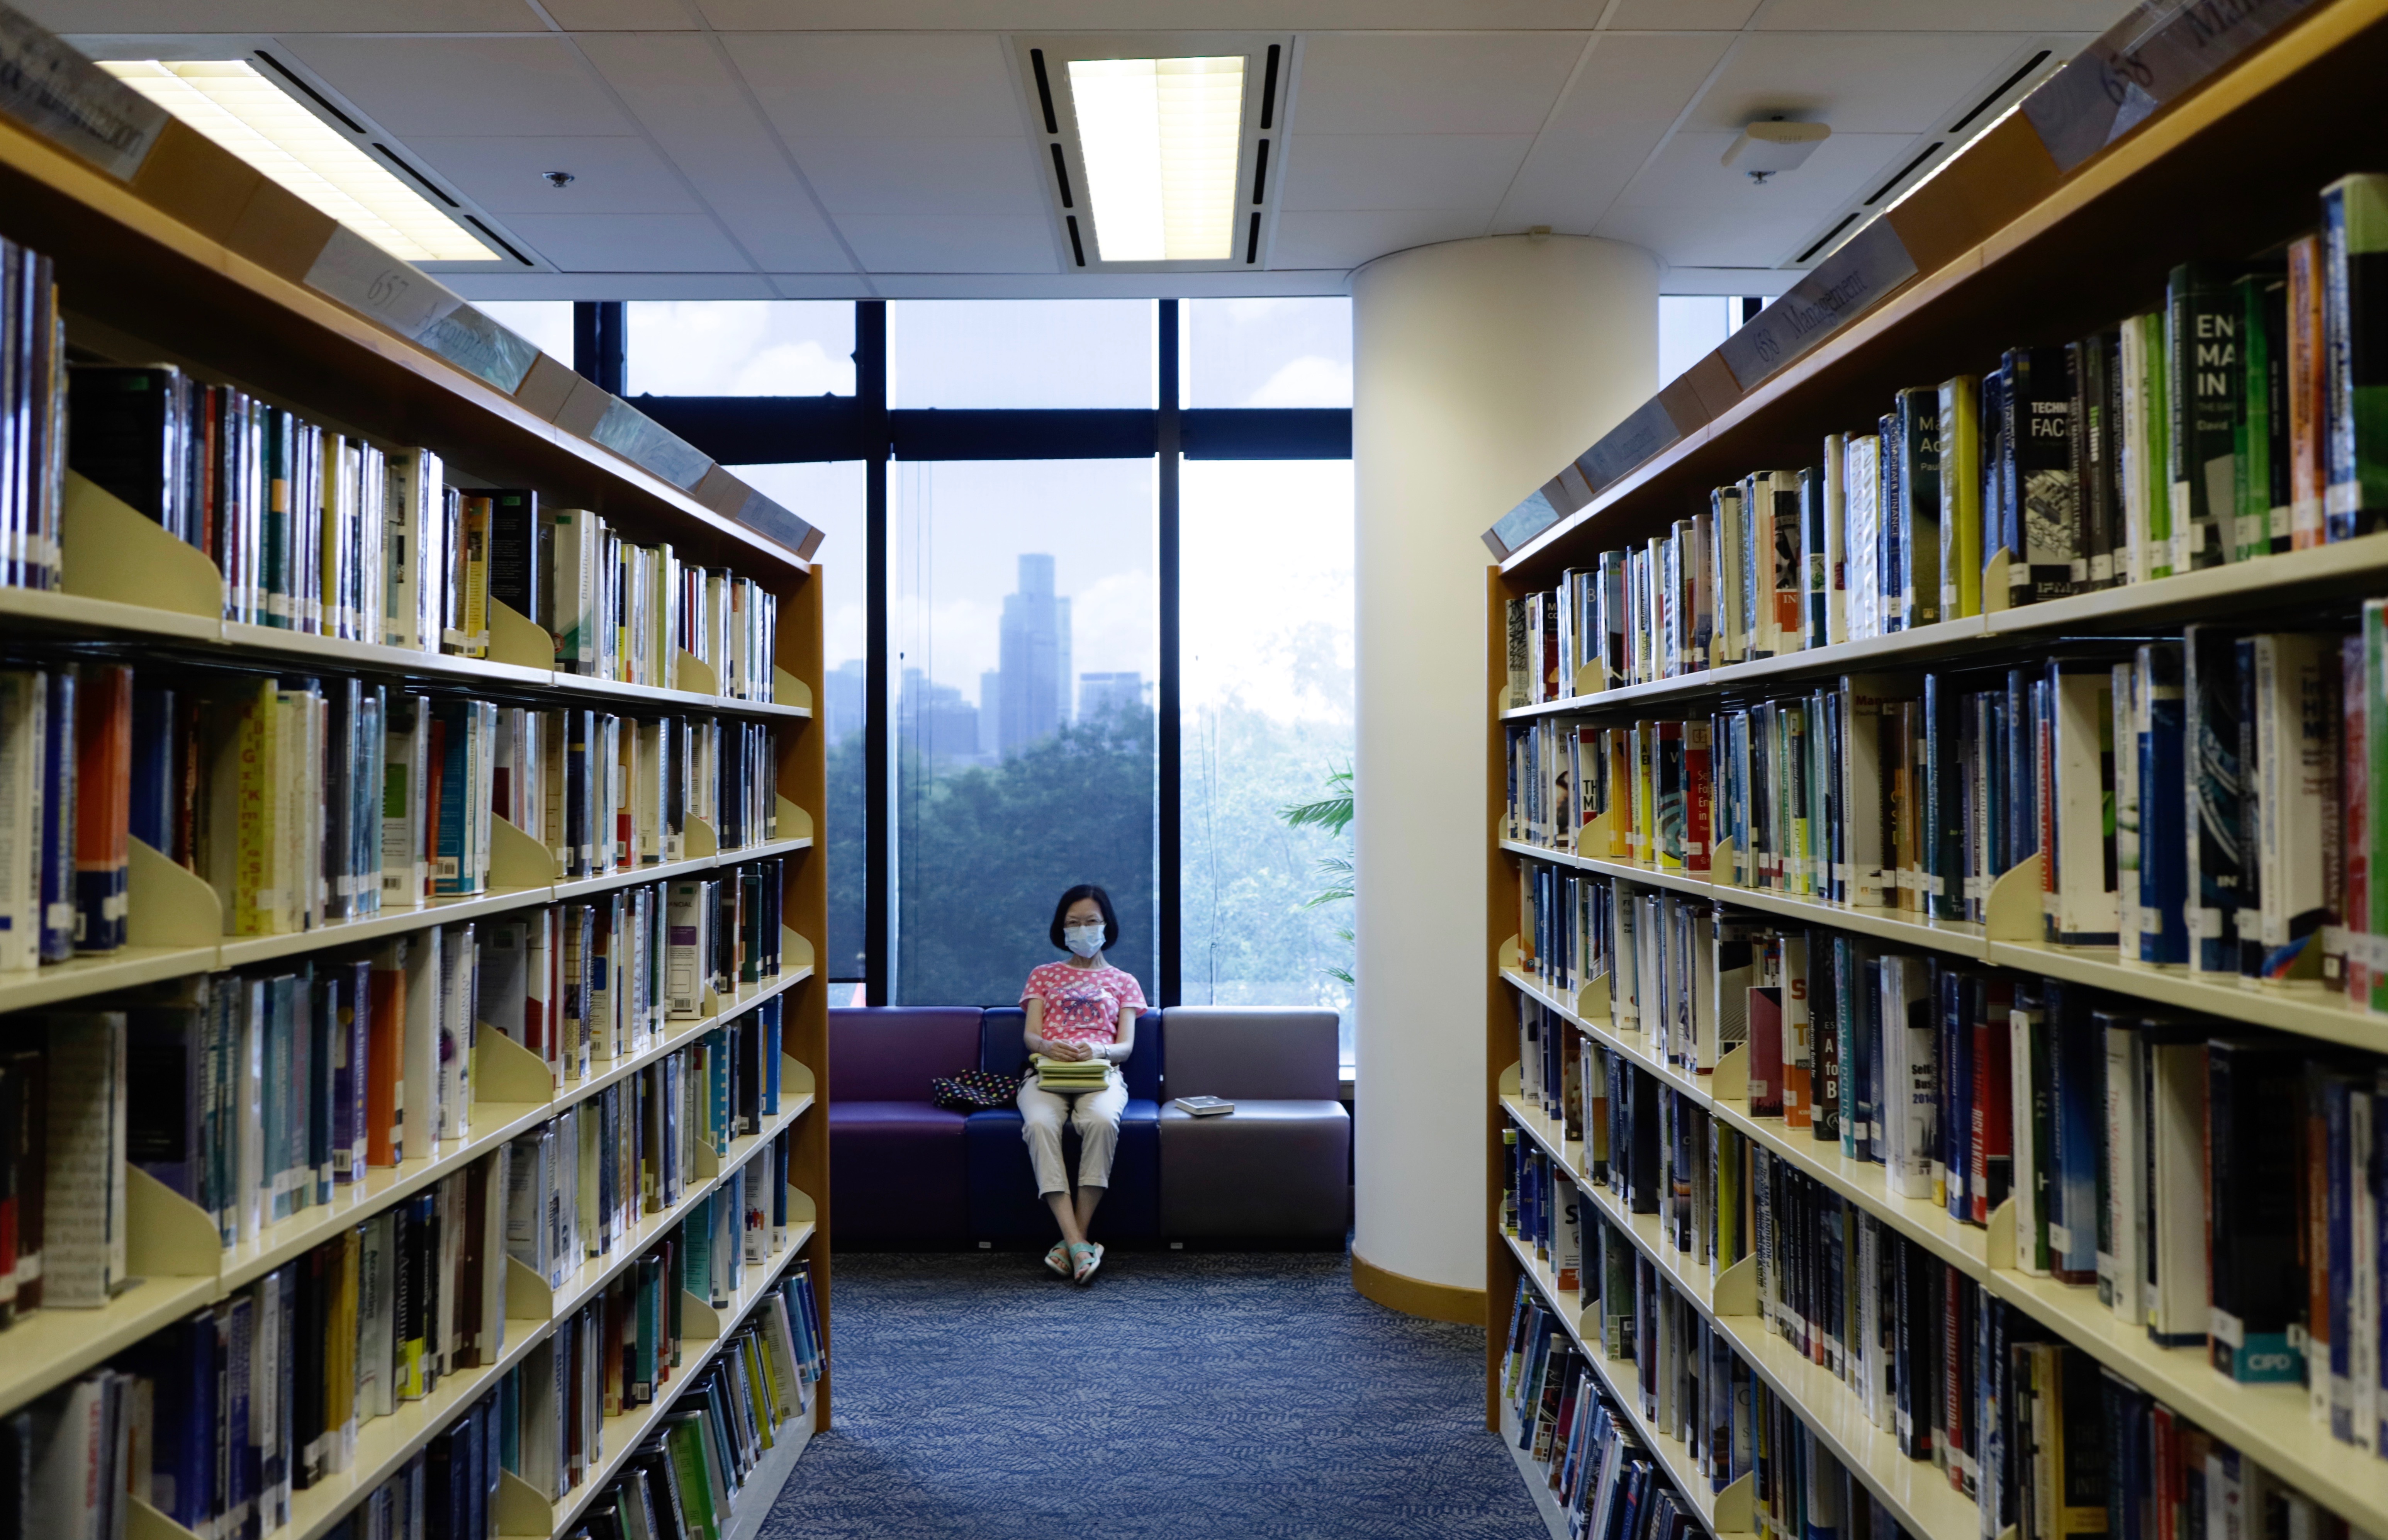 “Malas ideologías”: Beijing hace desaparecer libros de las bibliotecas públicas de Hong Kong